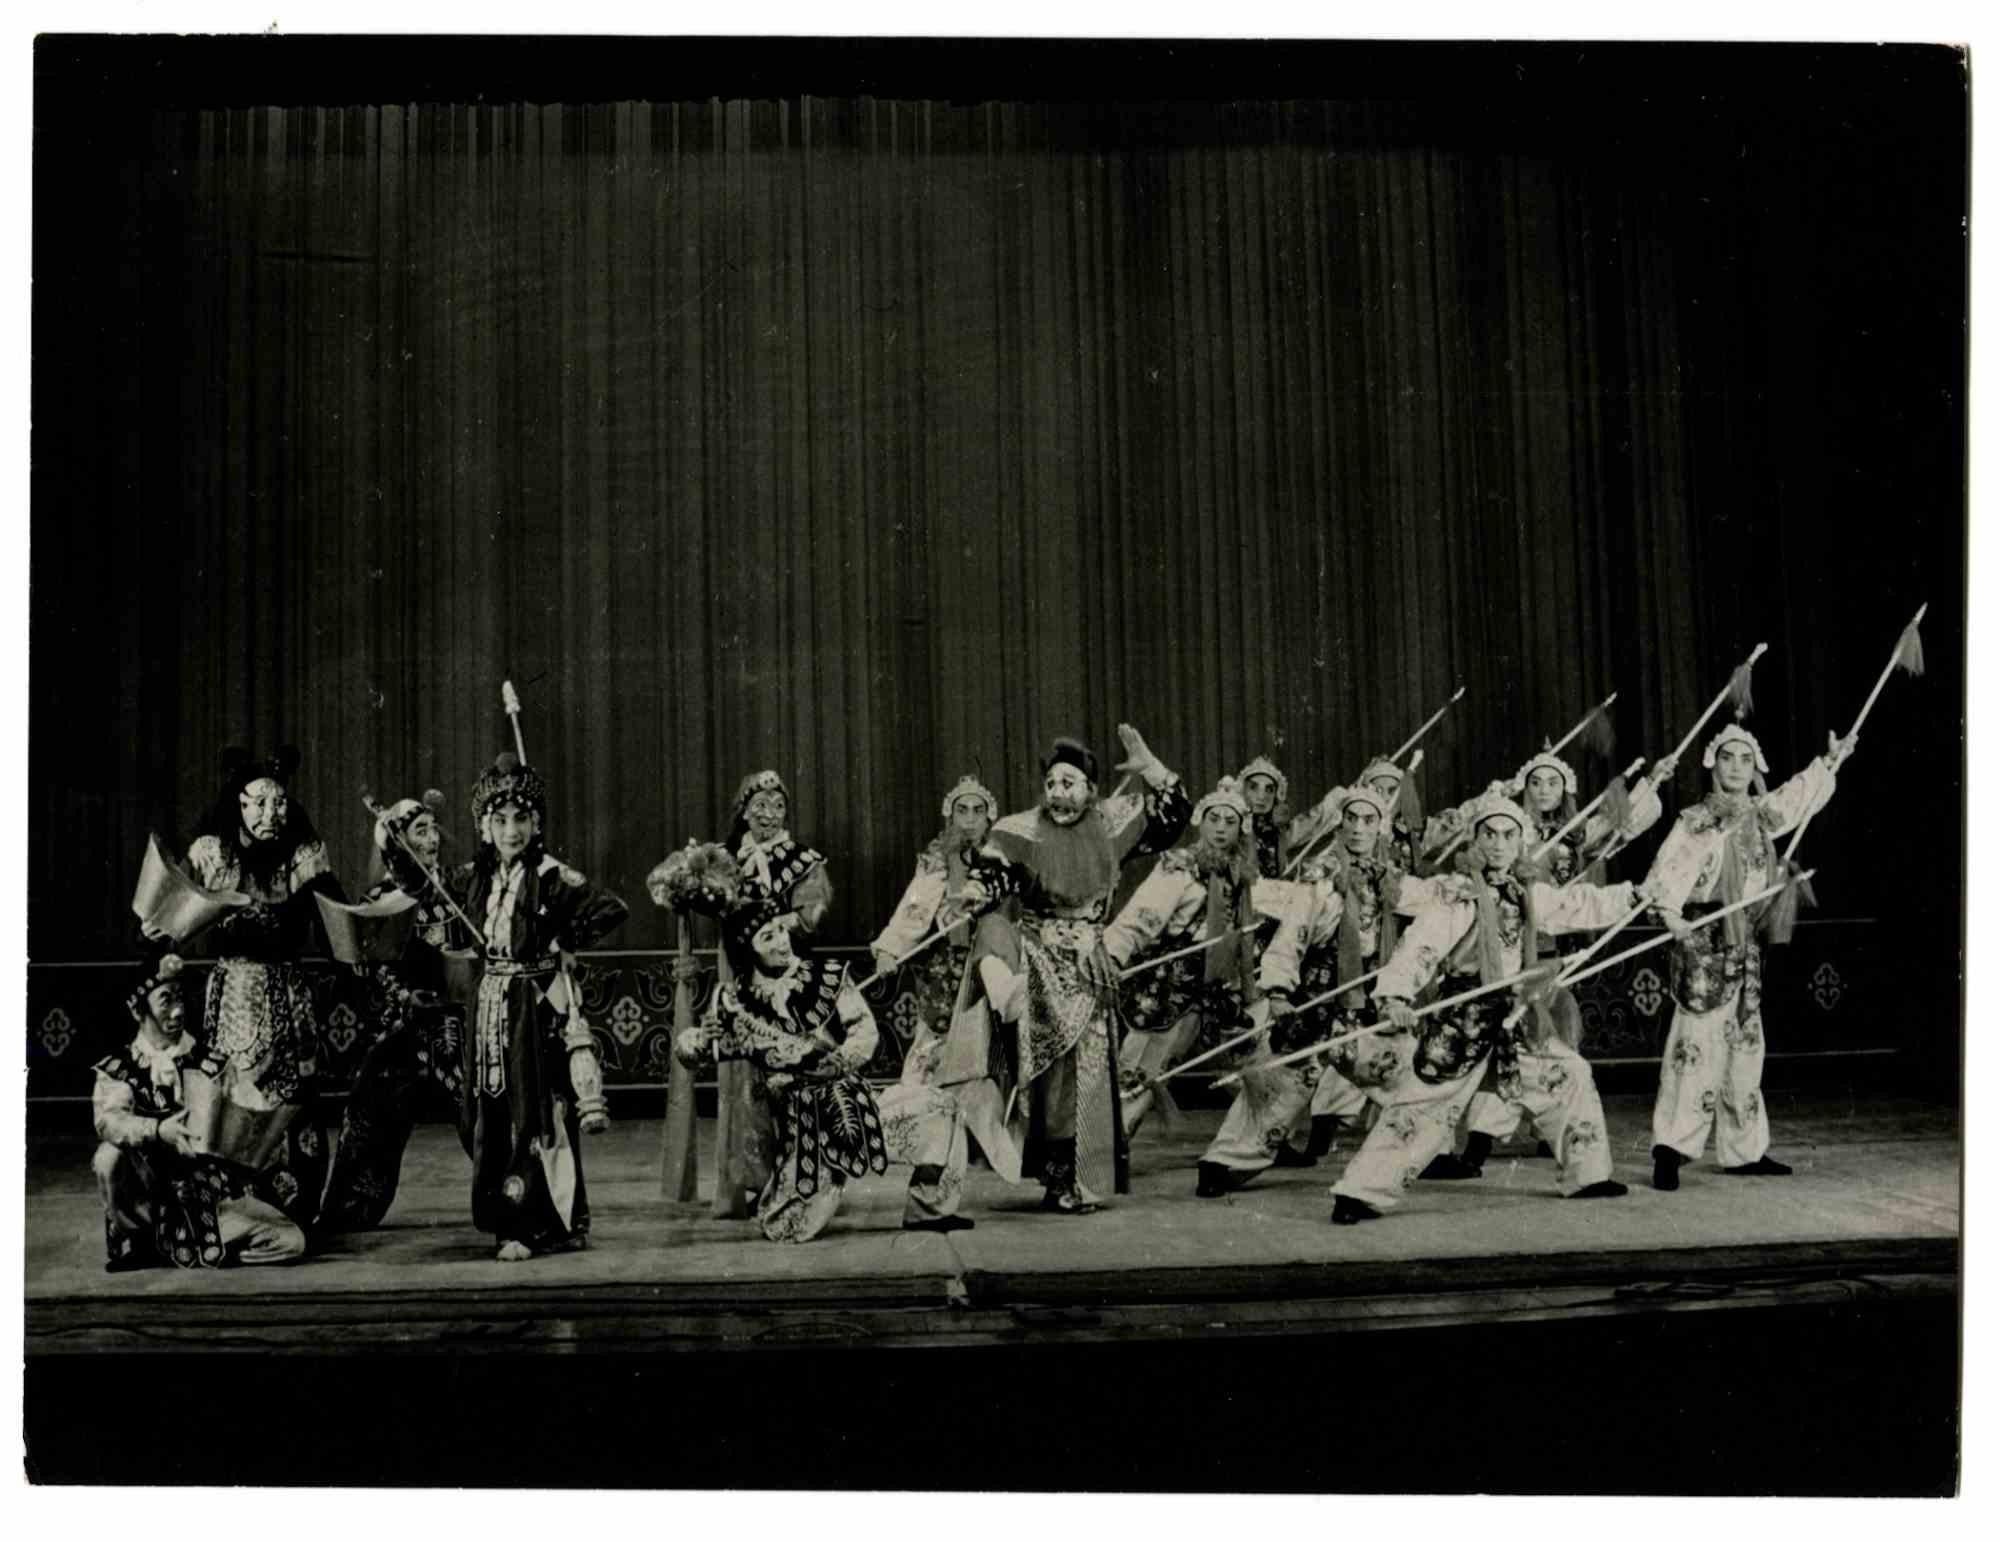 Unknown Figurative Photograph - Opera in China - 1980s